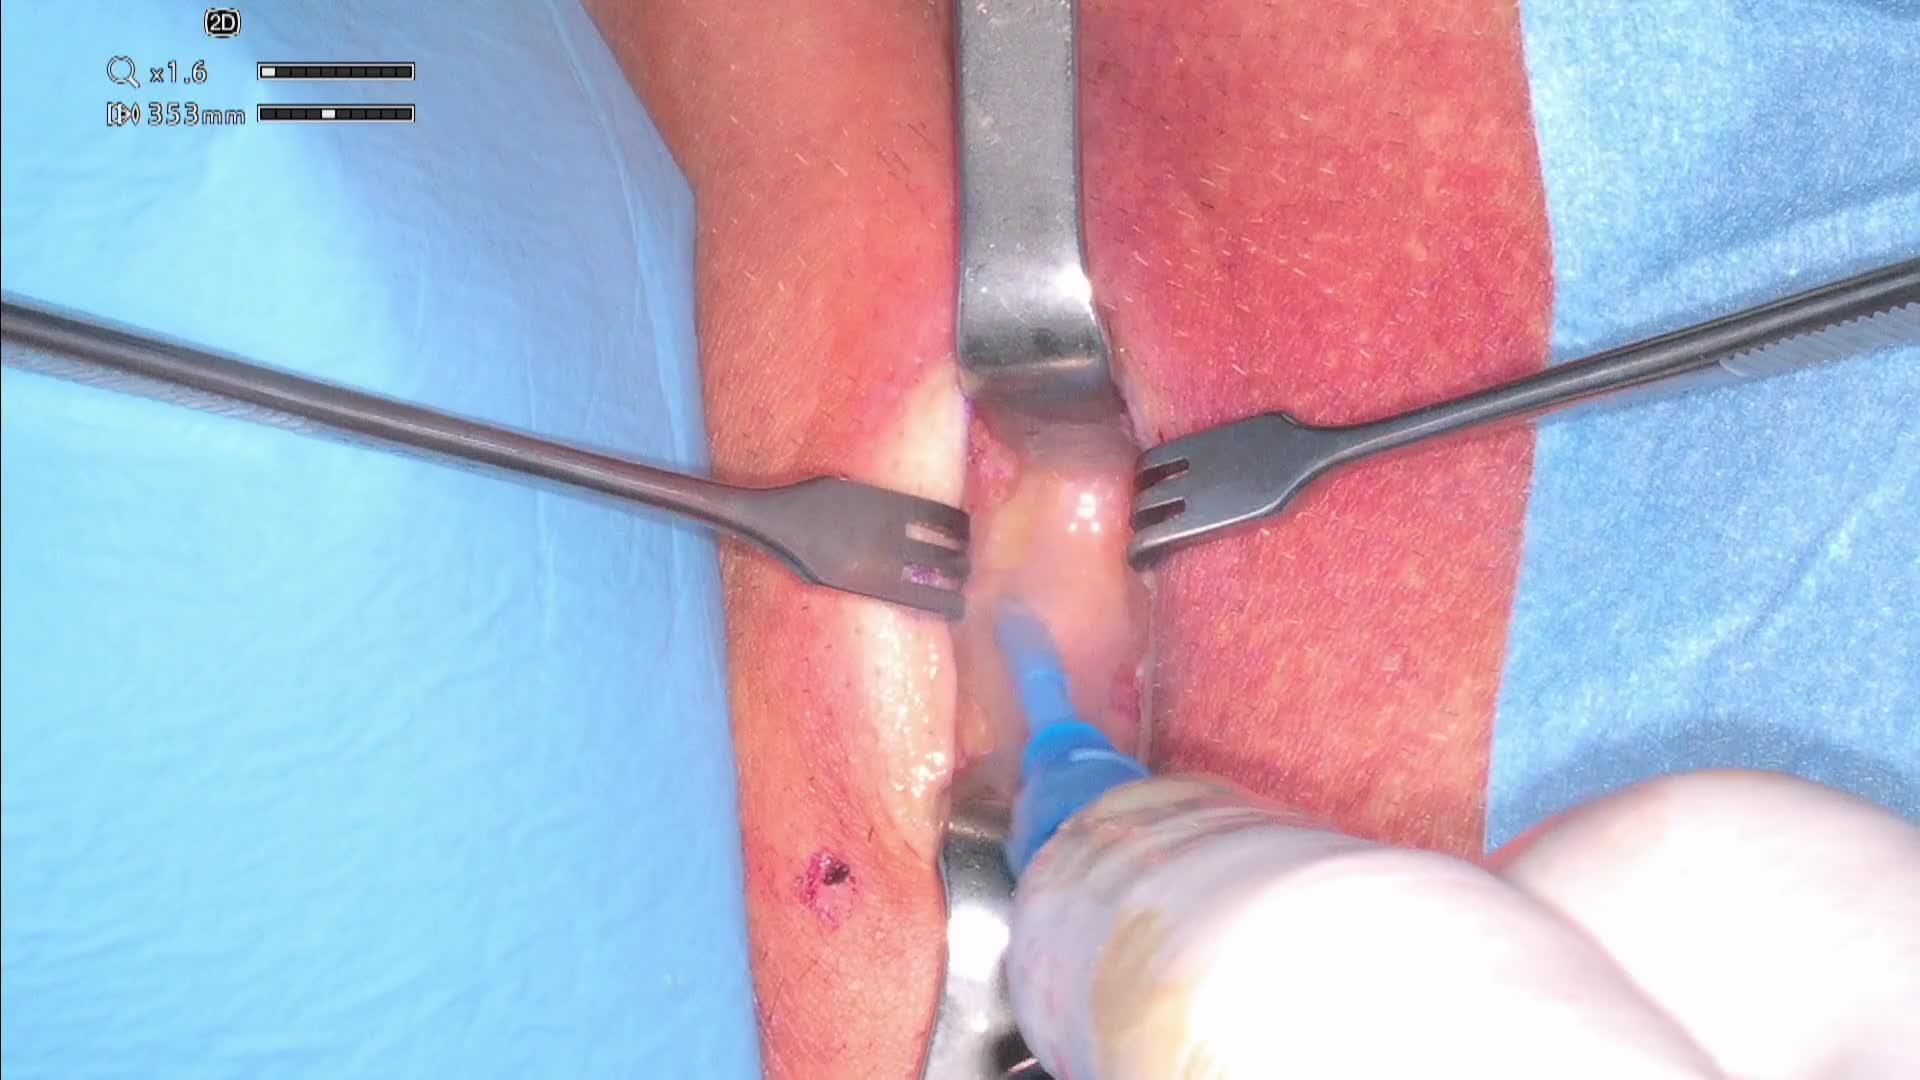 Tracheostomy under local anesthesia